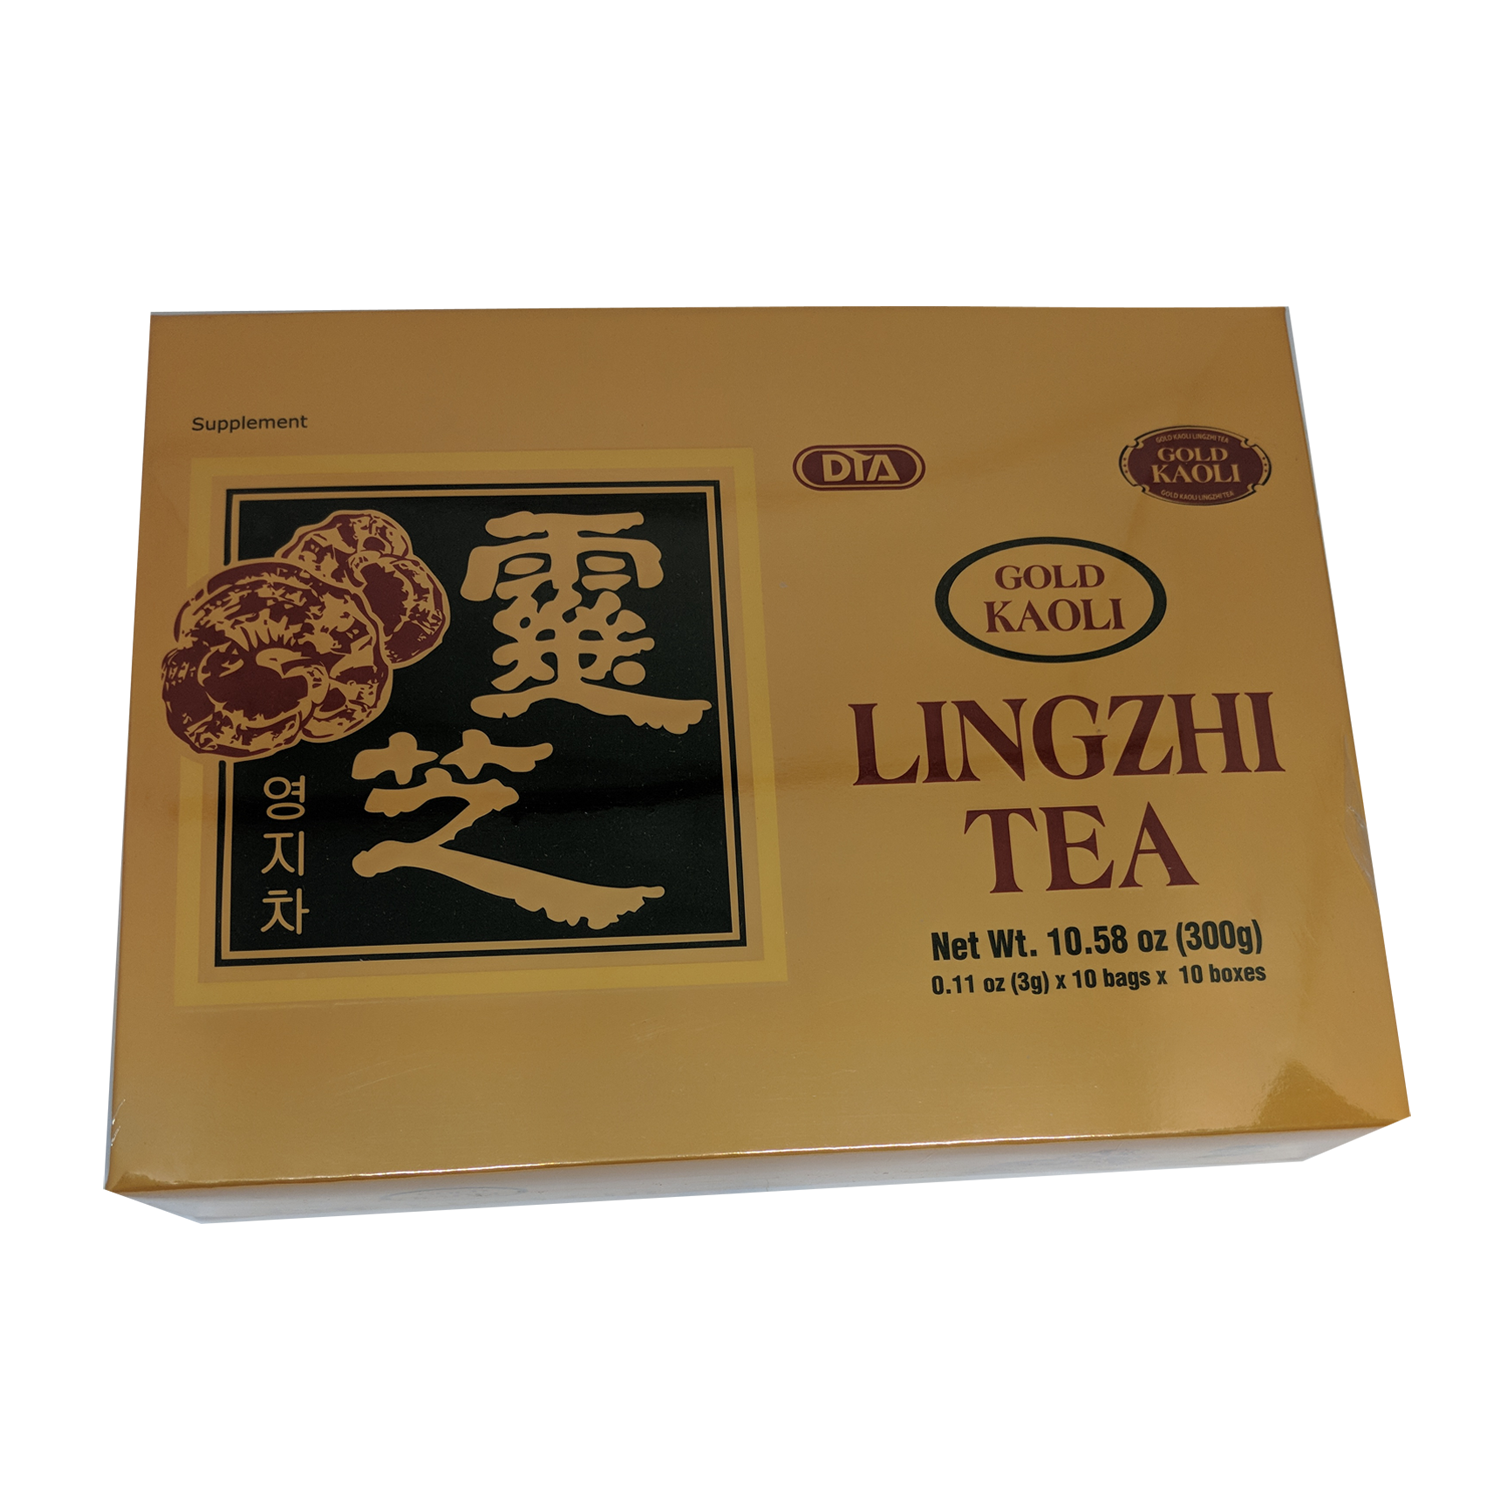 Gold Kaoli Linzhi tea